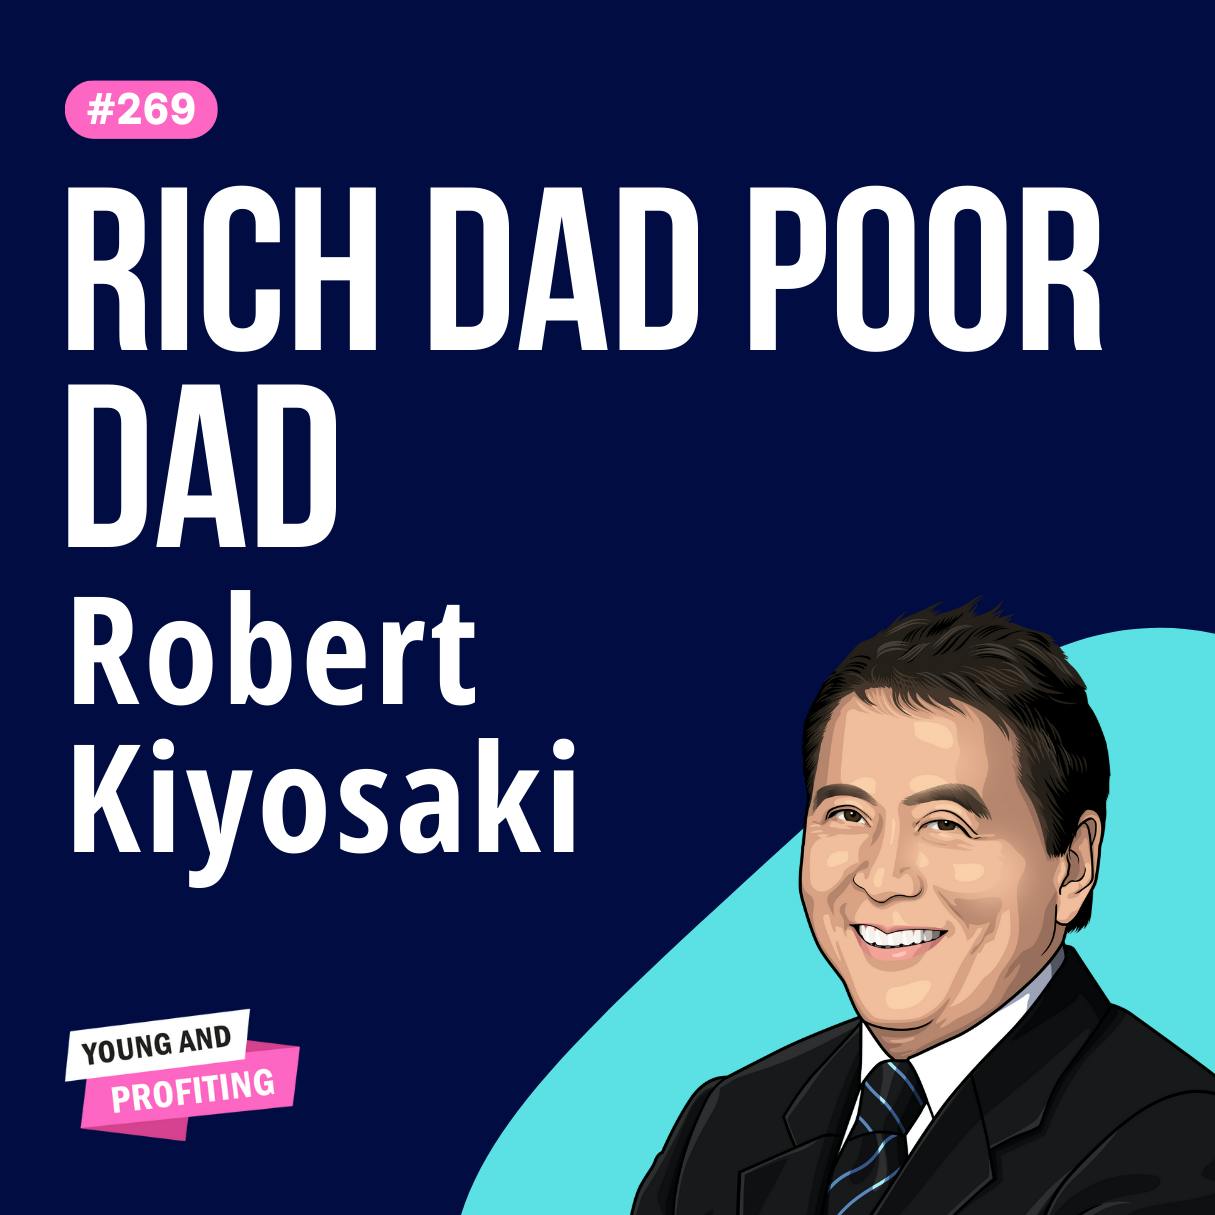 Robert Kiyosaki: Rich Dad Poor Dad, These Common Beliefs Keep Hard-Working People Poor | E269 by Hala Taha | YAP Media Network